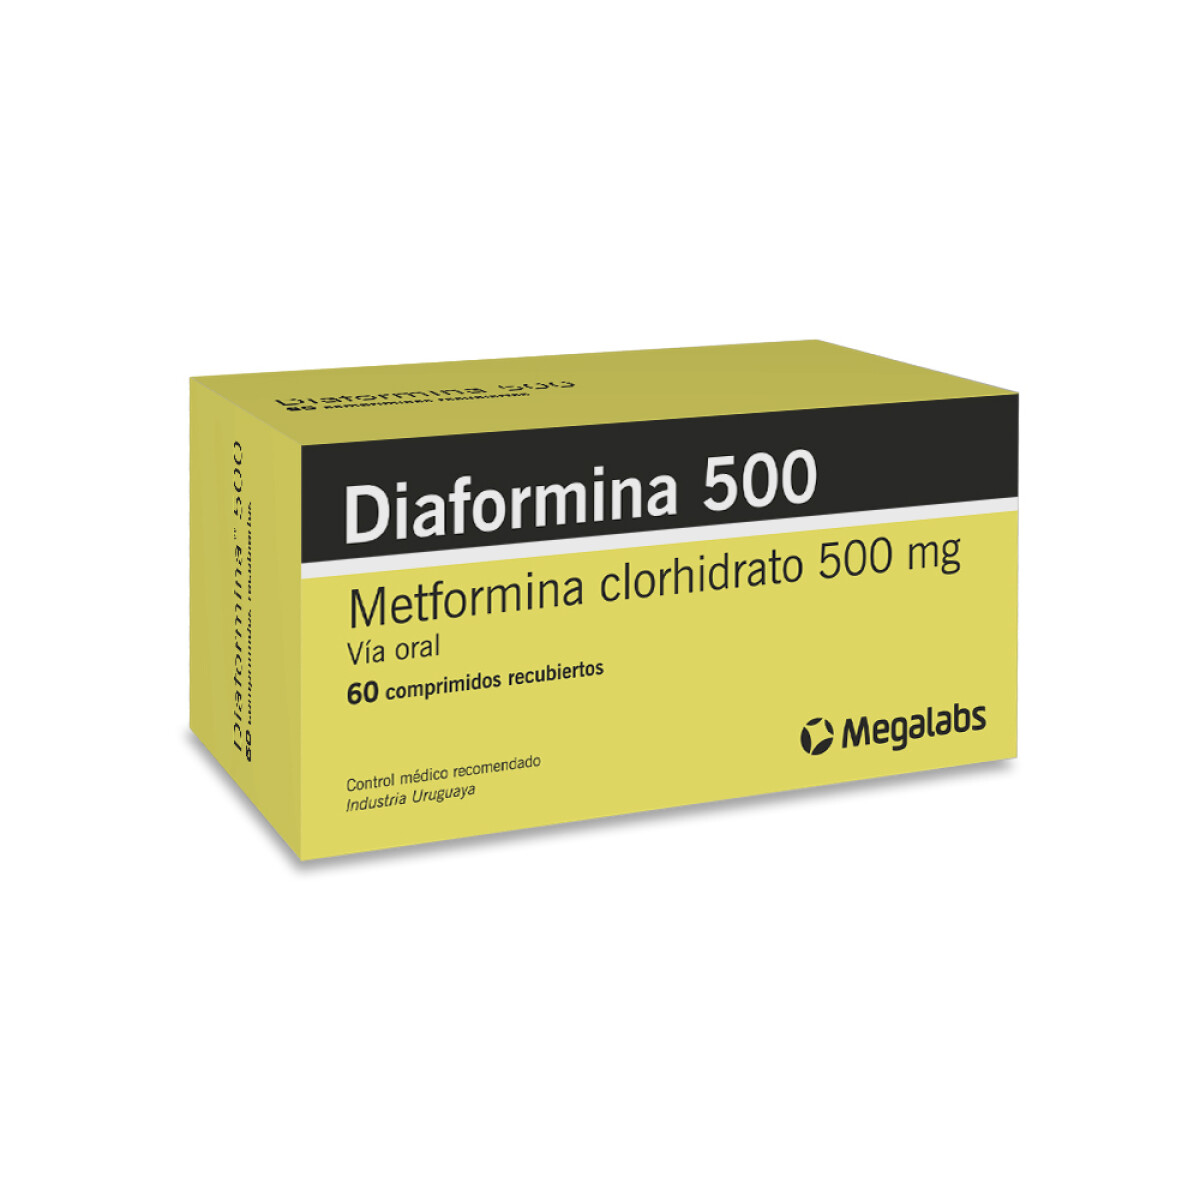 Diaformina 500 